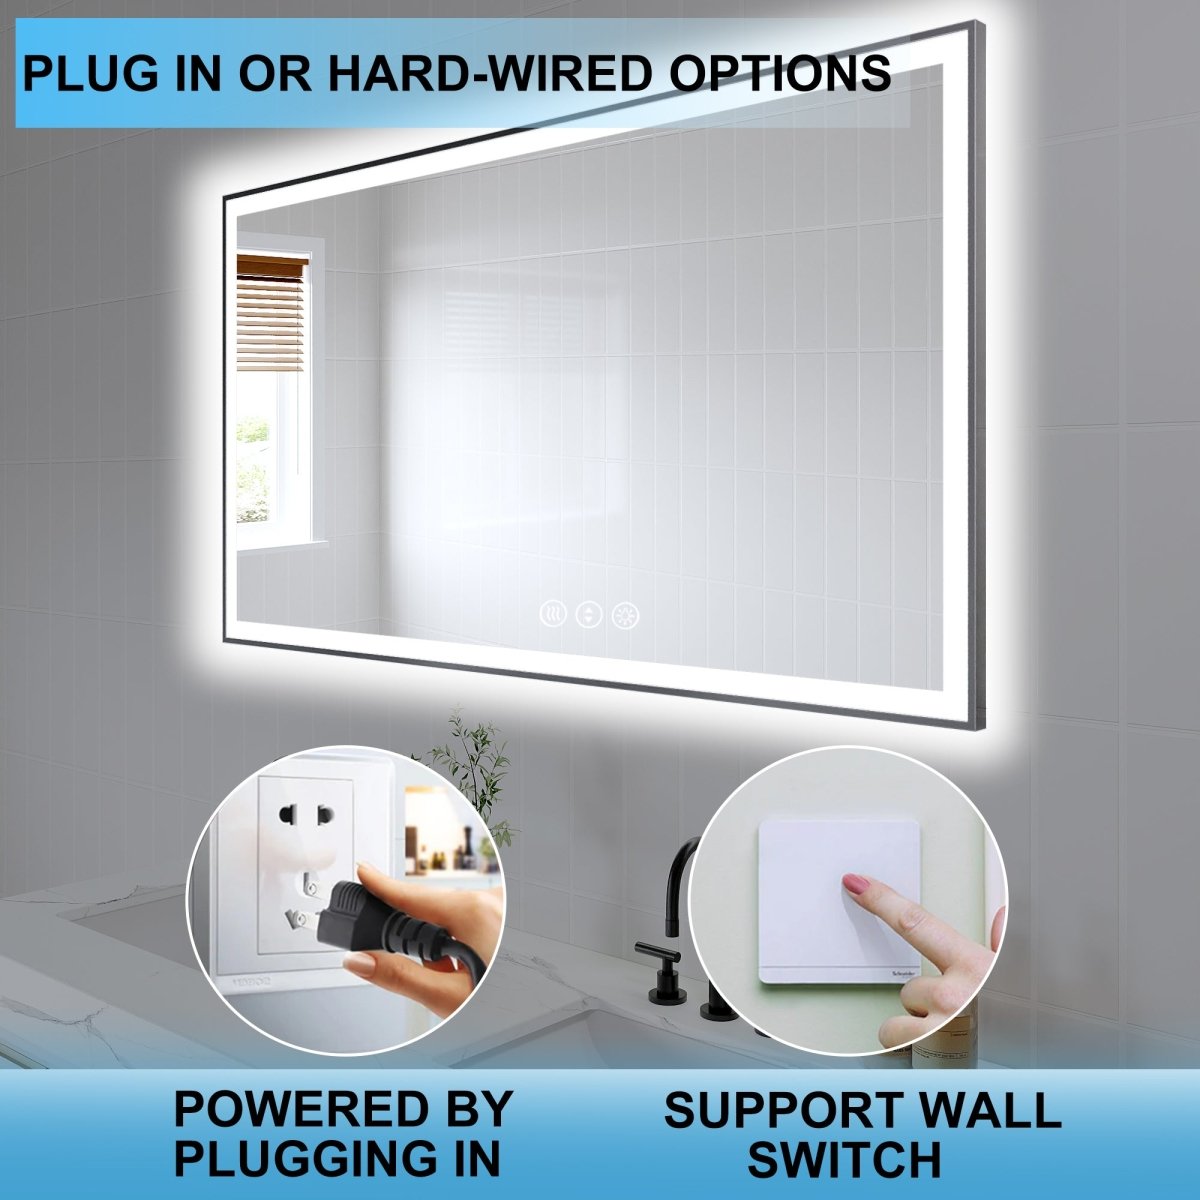 Apex-Noir 40"x32" Framed LED Lighted Bathroom Mirror